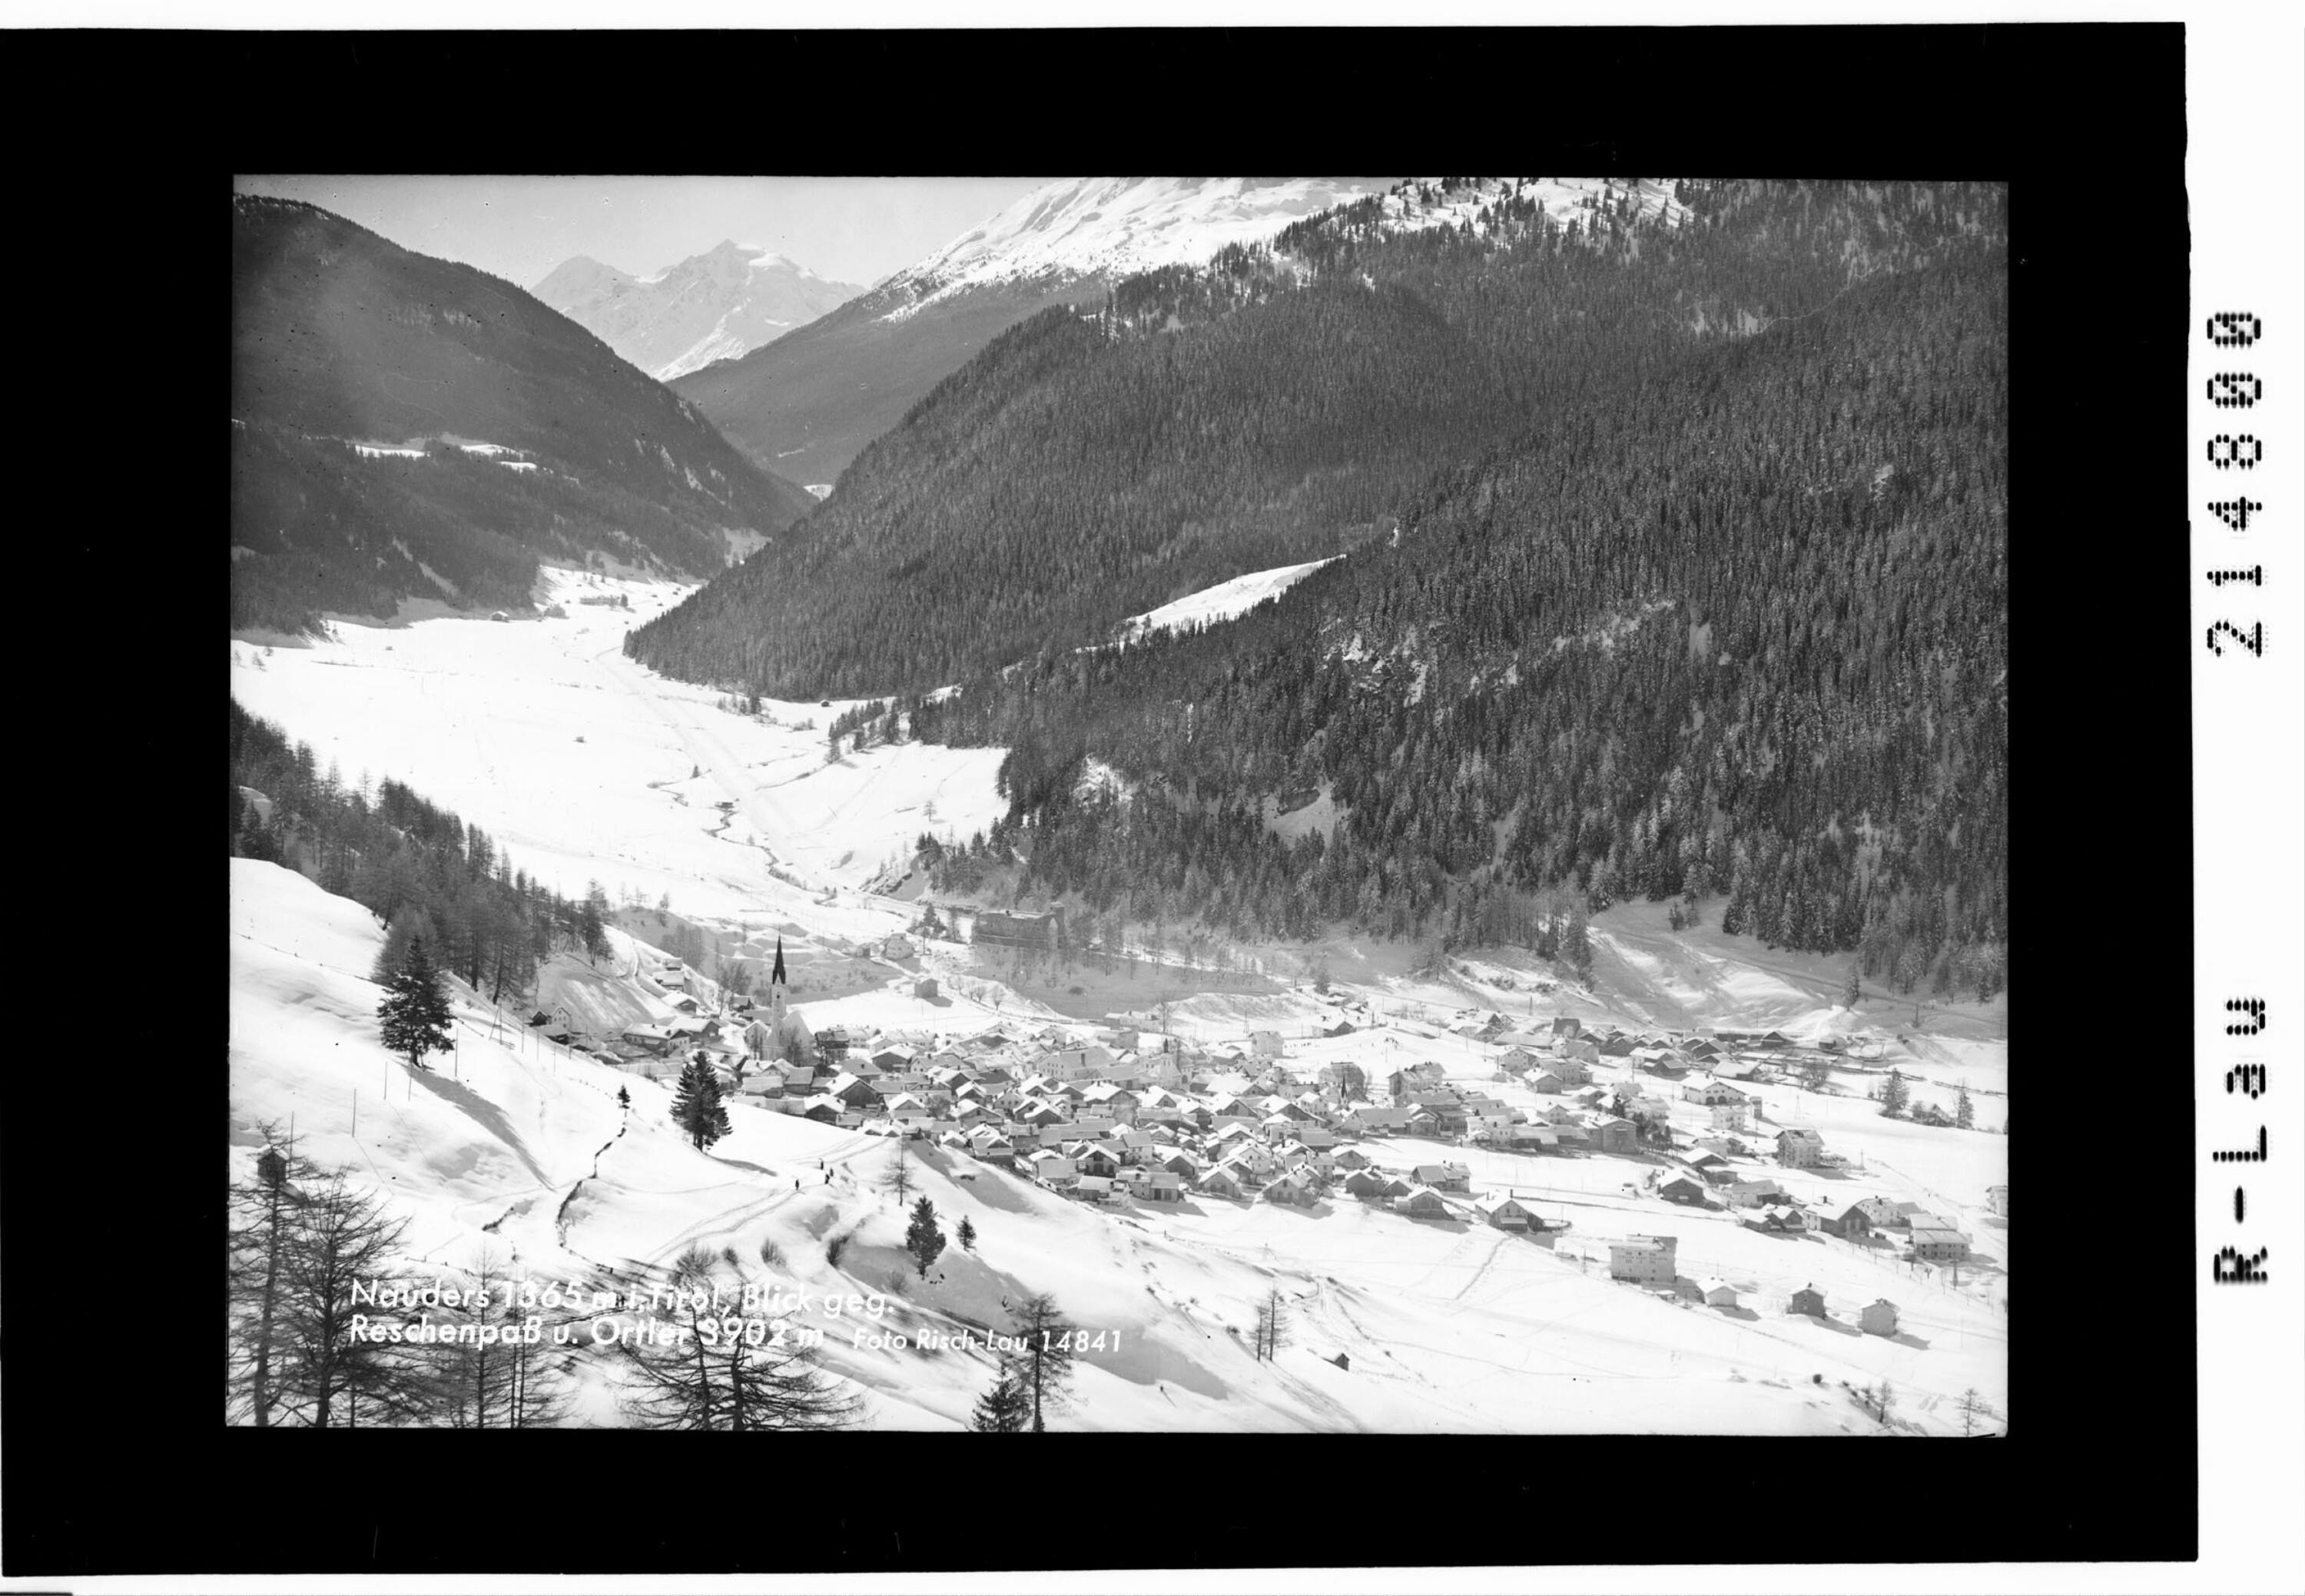 Nauders 1365 m in Tirol, Blick gegen Reschenpass und Ortler 3902 m></div>


    <hr>
    <div class=